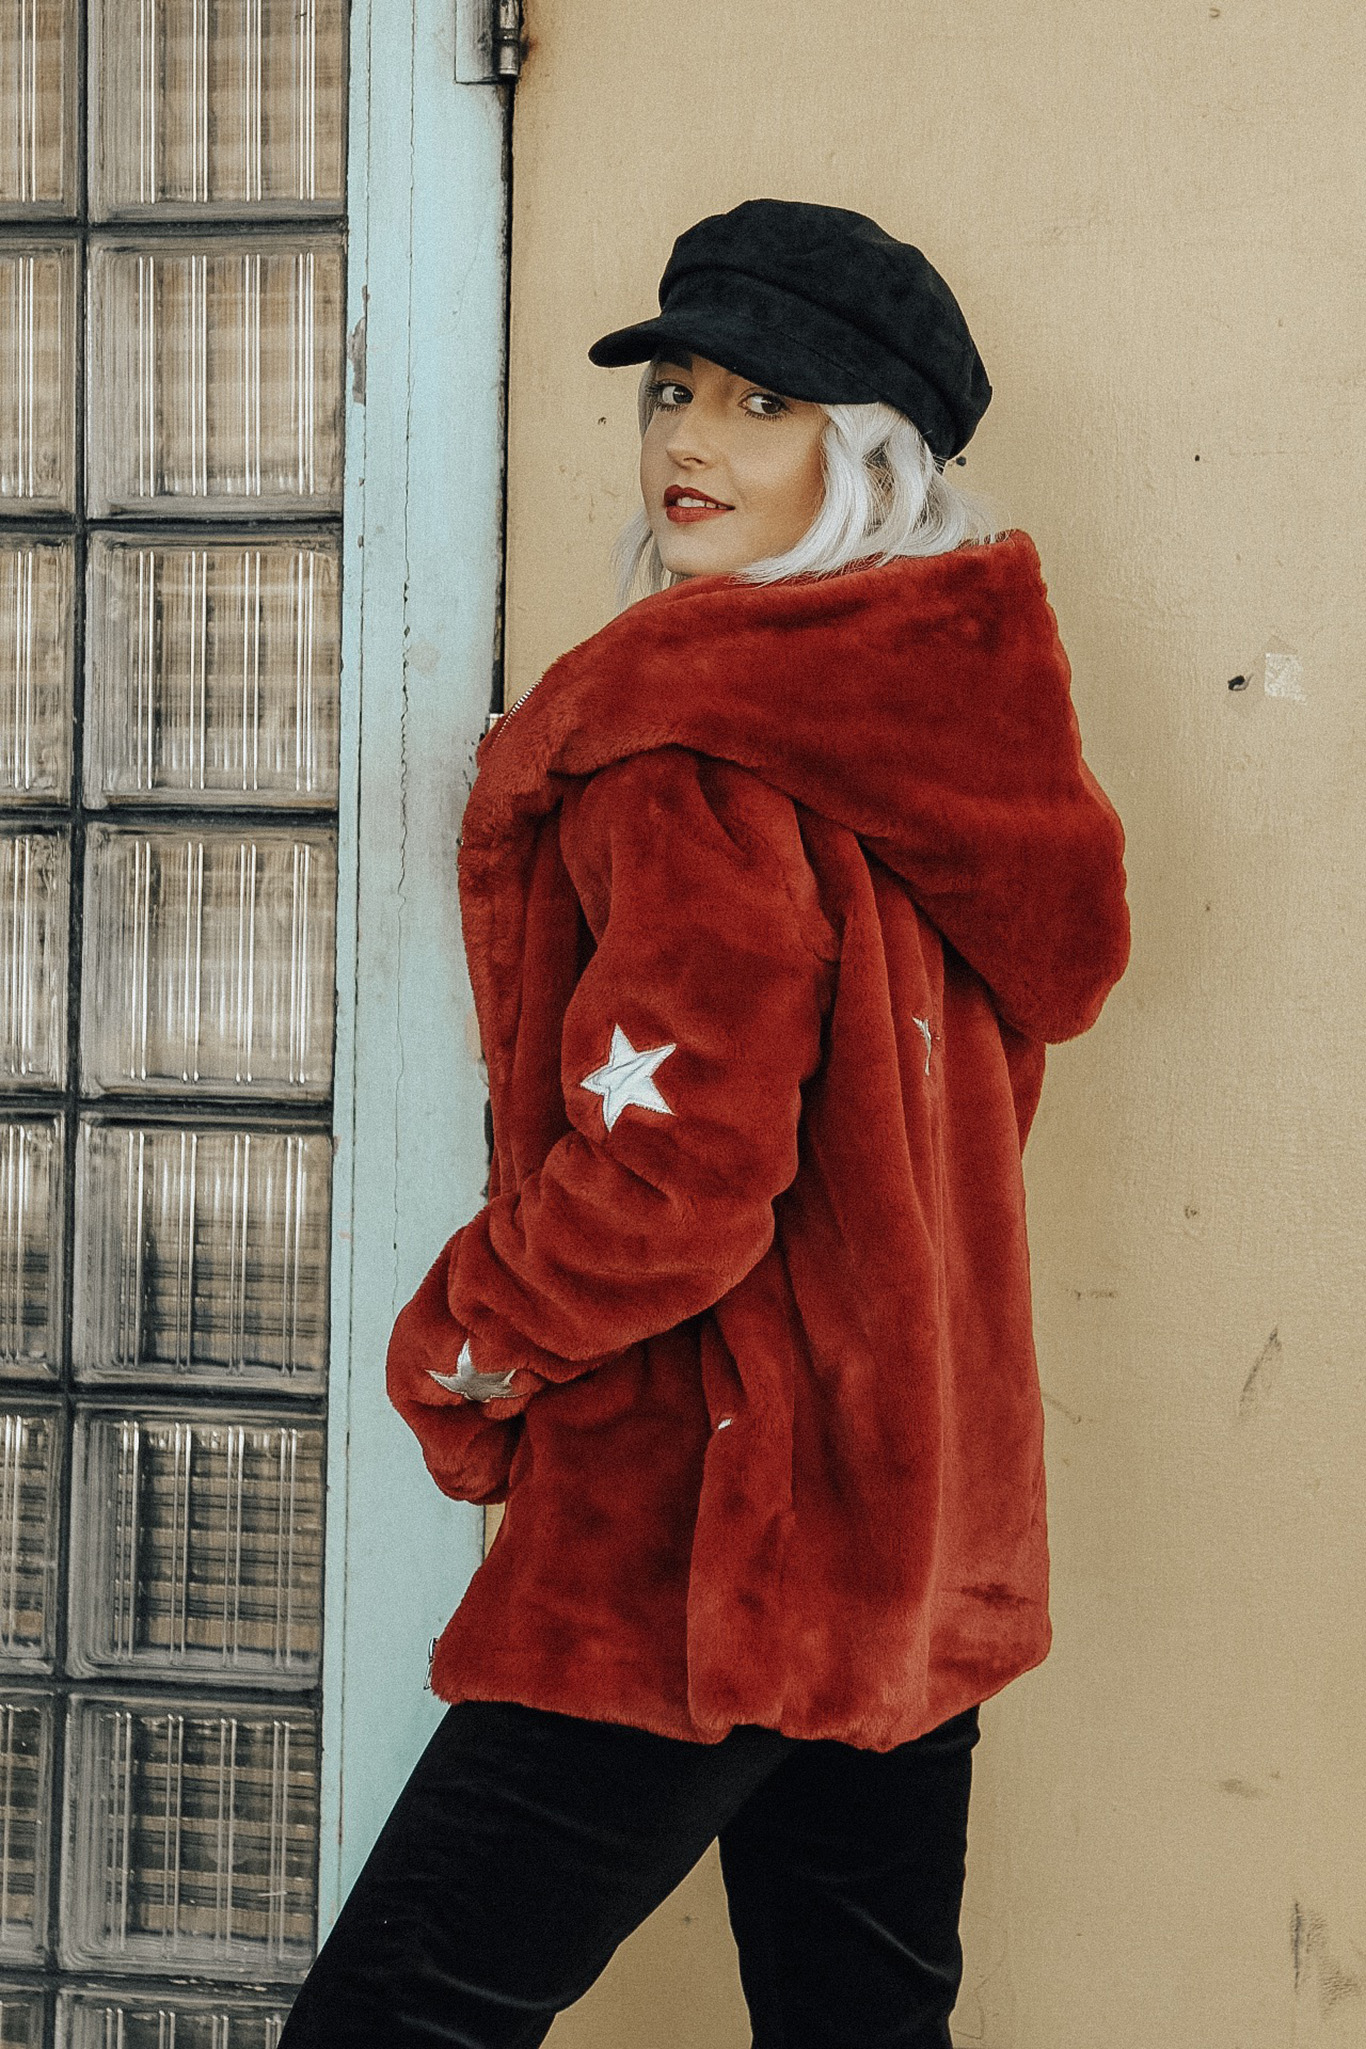 Alena Gidenko of modaprints.com shares her favorite cozy star coat